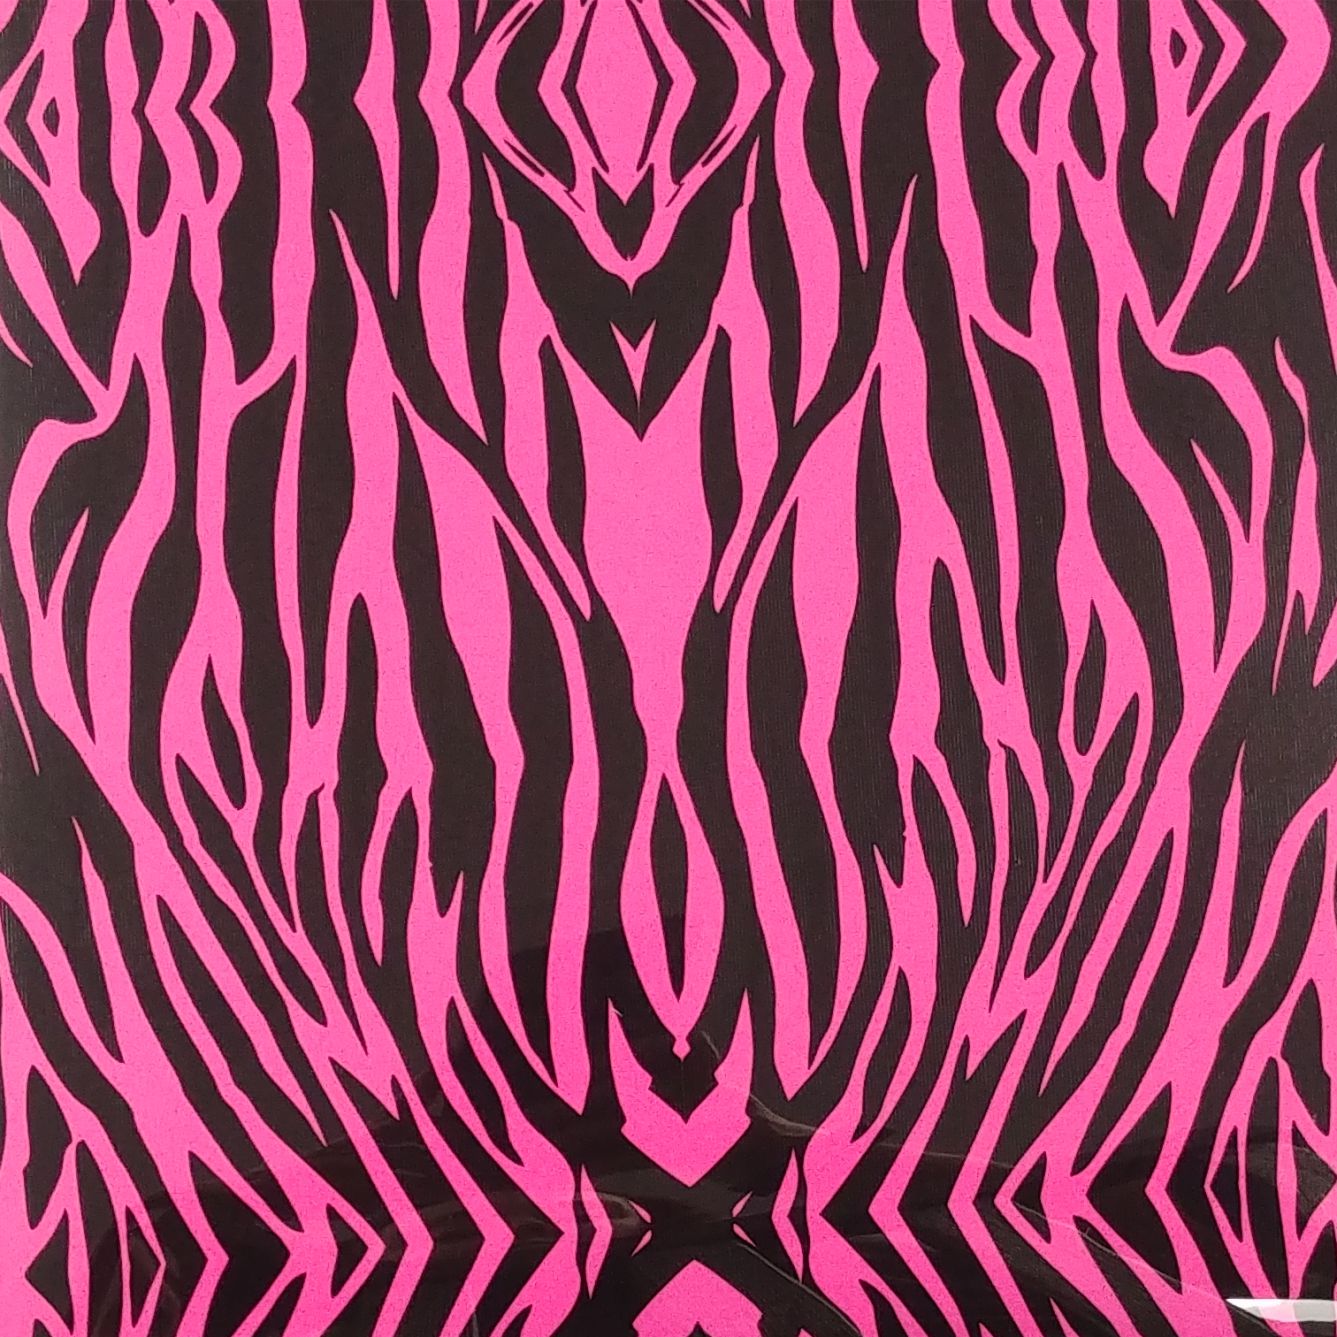 ThermoFlex HTV Fashion Patterns 12x15 Sheets-Hot Pink Zebra CLEARANCE